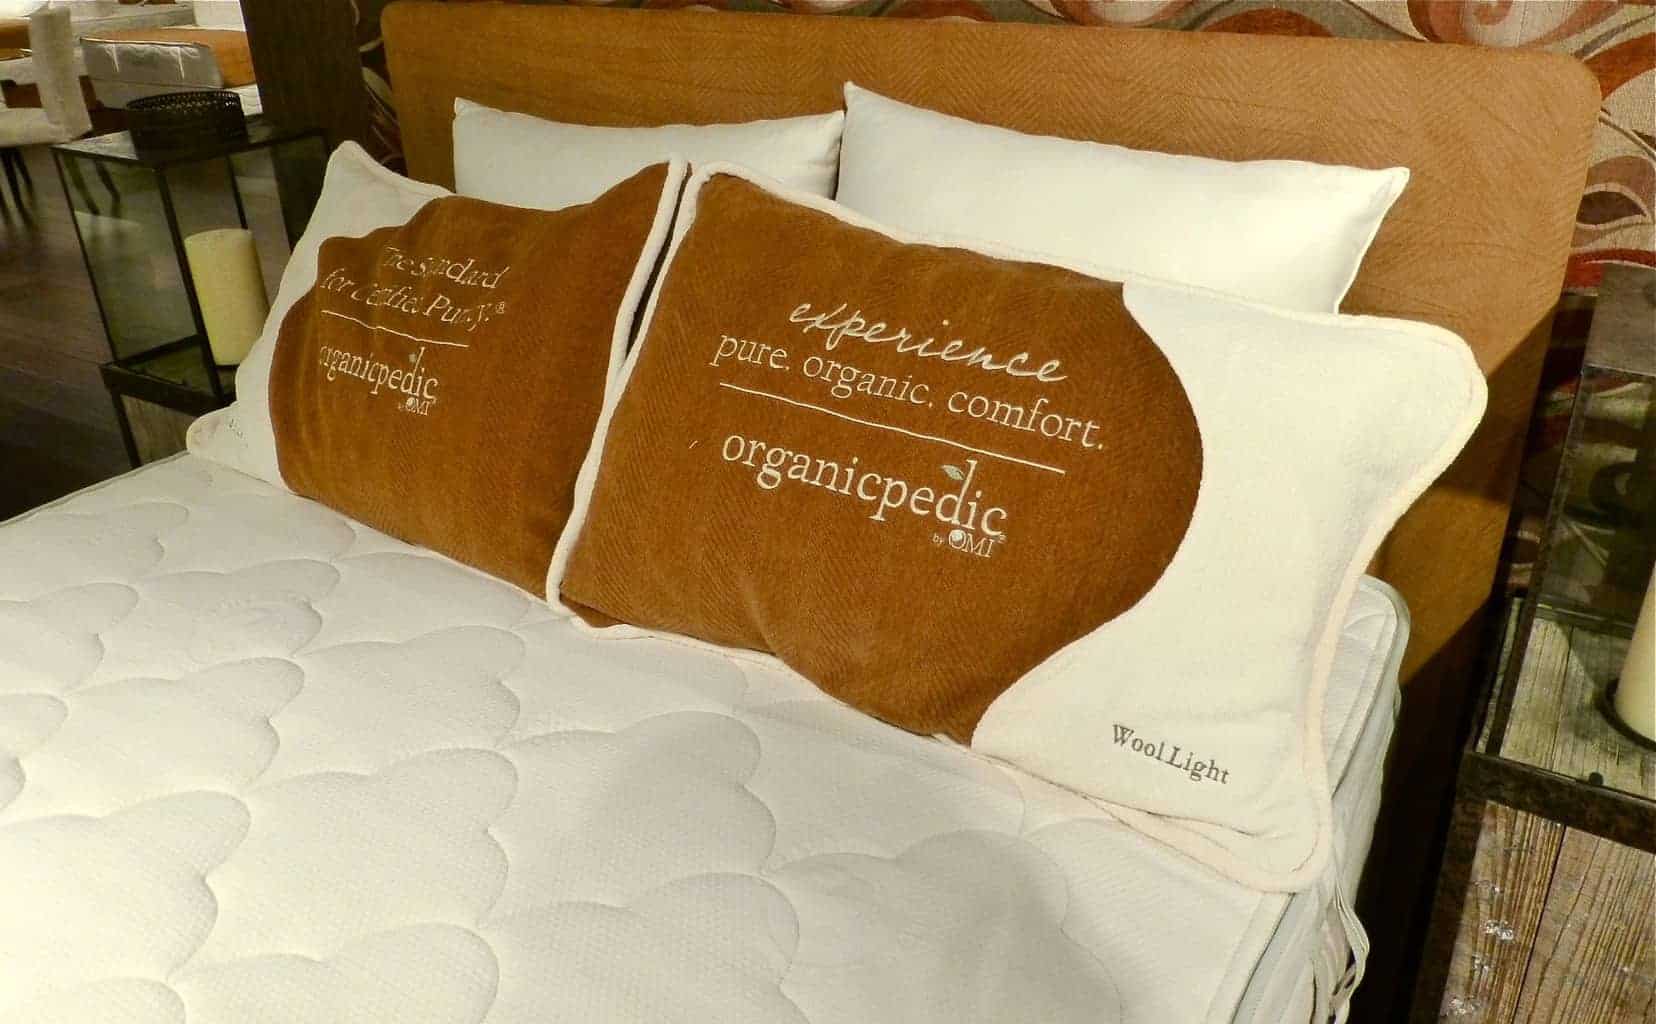 Organicpedic mattress set